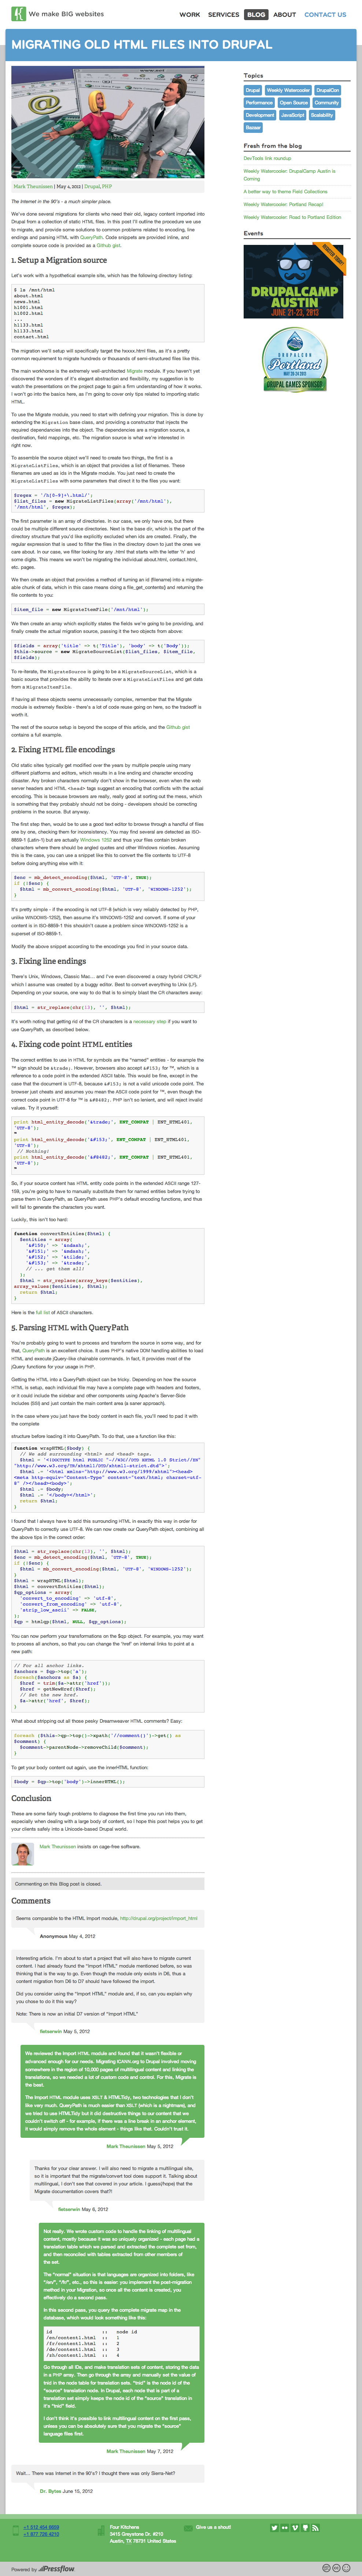 Screenshot of blog post Migrating Old HTML Files